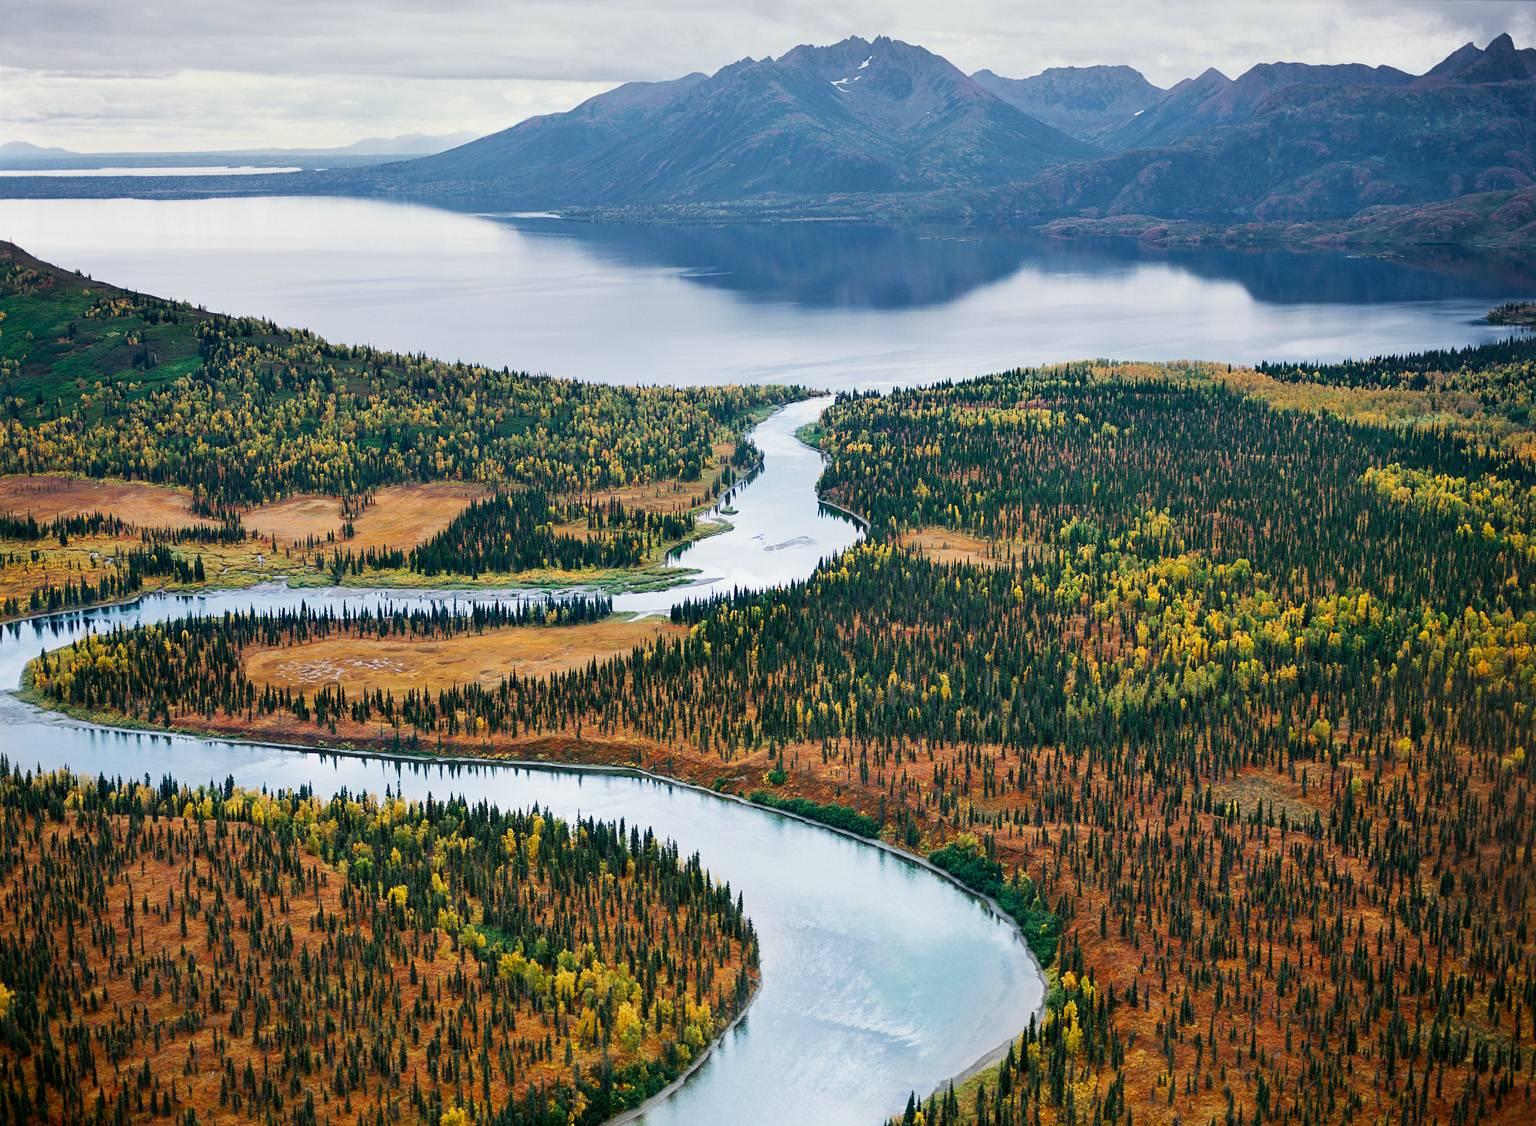 Robert Glenn Ketchum Landscape Photograph - The Allen River Enters Lake Chauekuktuli, Alaska